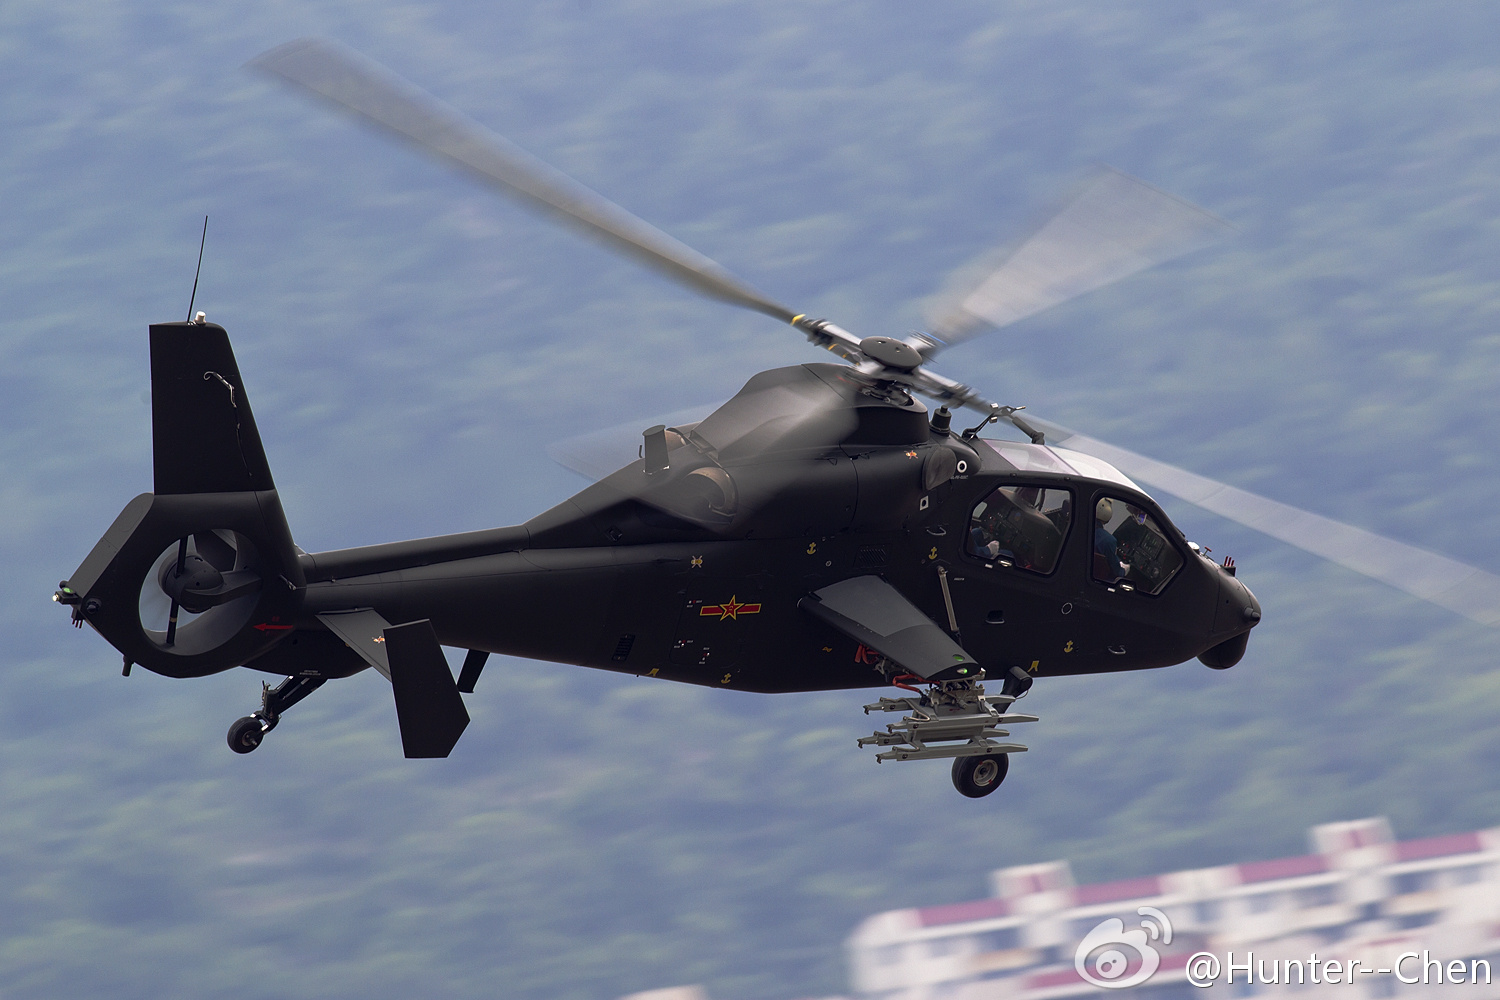 Z 19 ru. Вертолет Harbin z-19. Ударный вертолет CAIC WZ-10. Китайский вертолет CAIC WZ 19. Ударные вертолеты z-19.